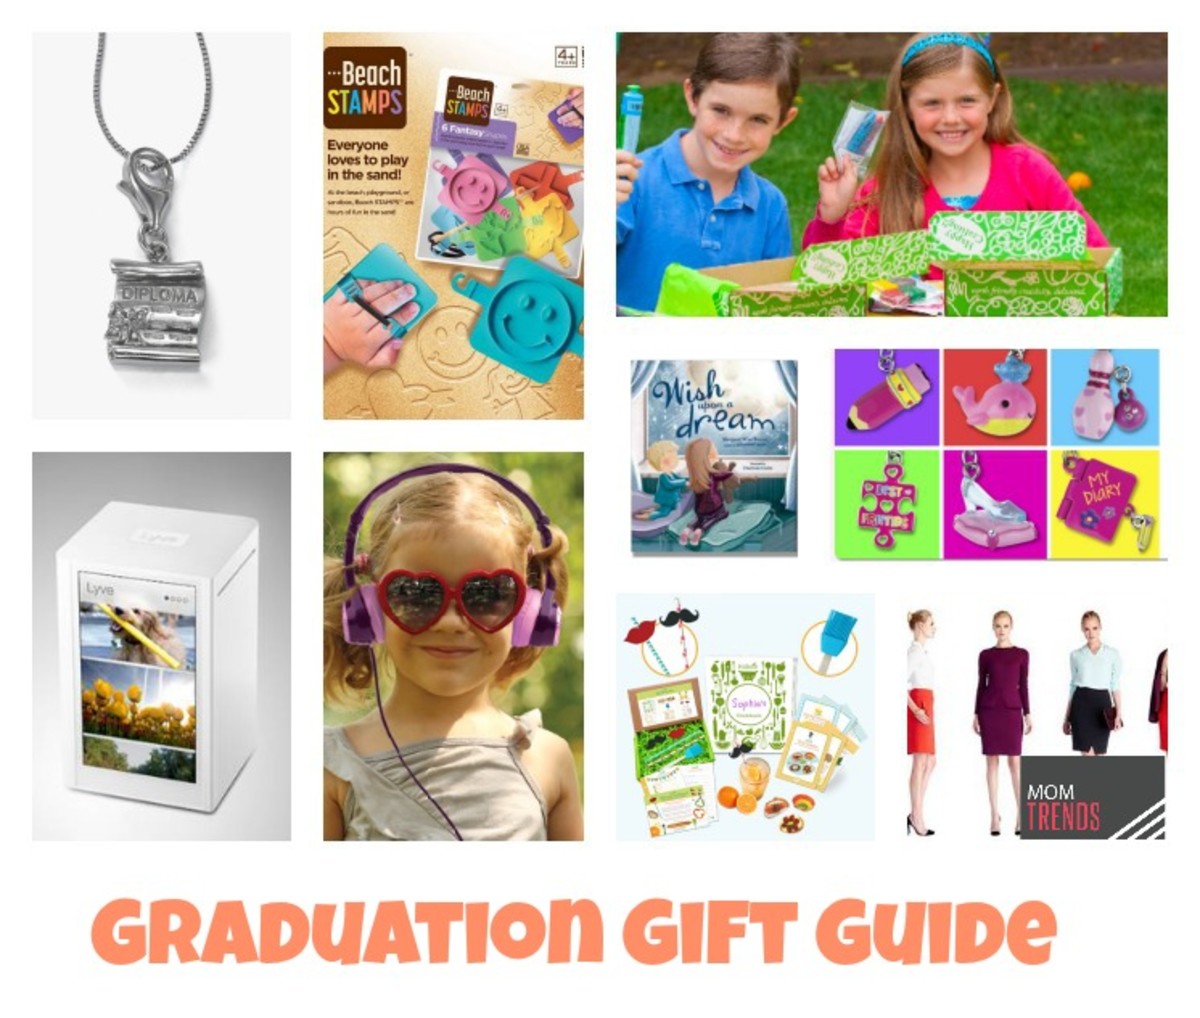 Graduation GIft Guide